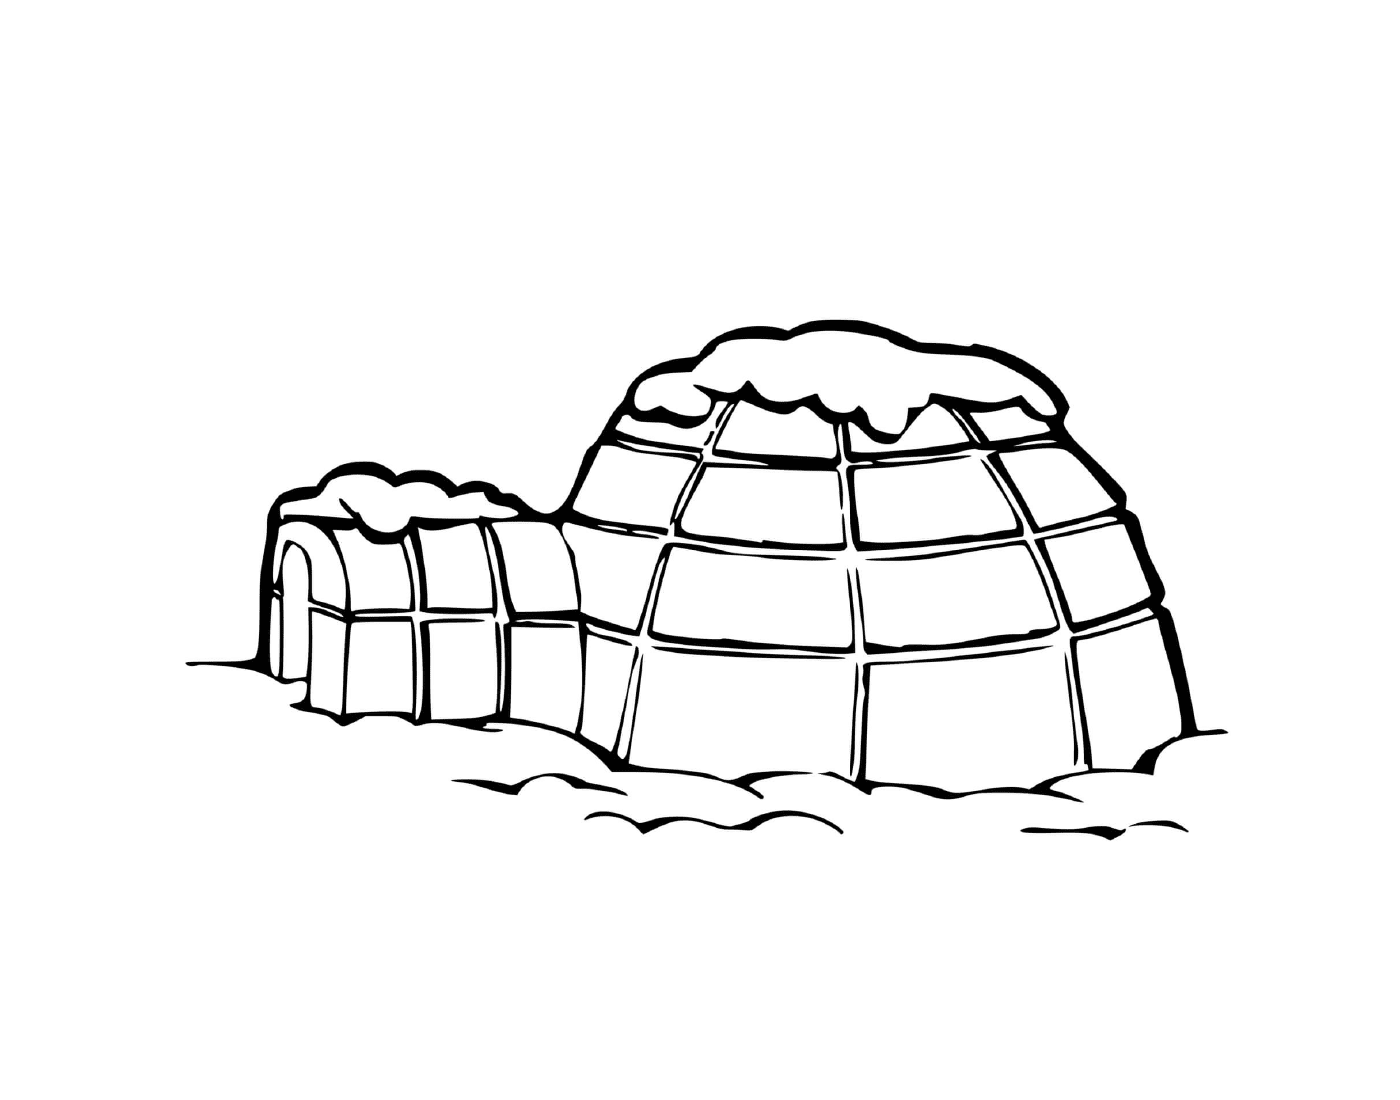 coloriage igloo habitation hivernale au froid